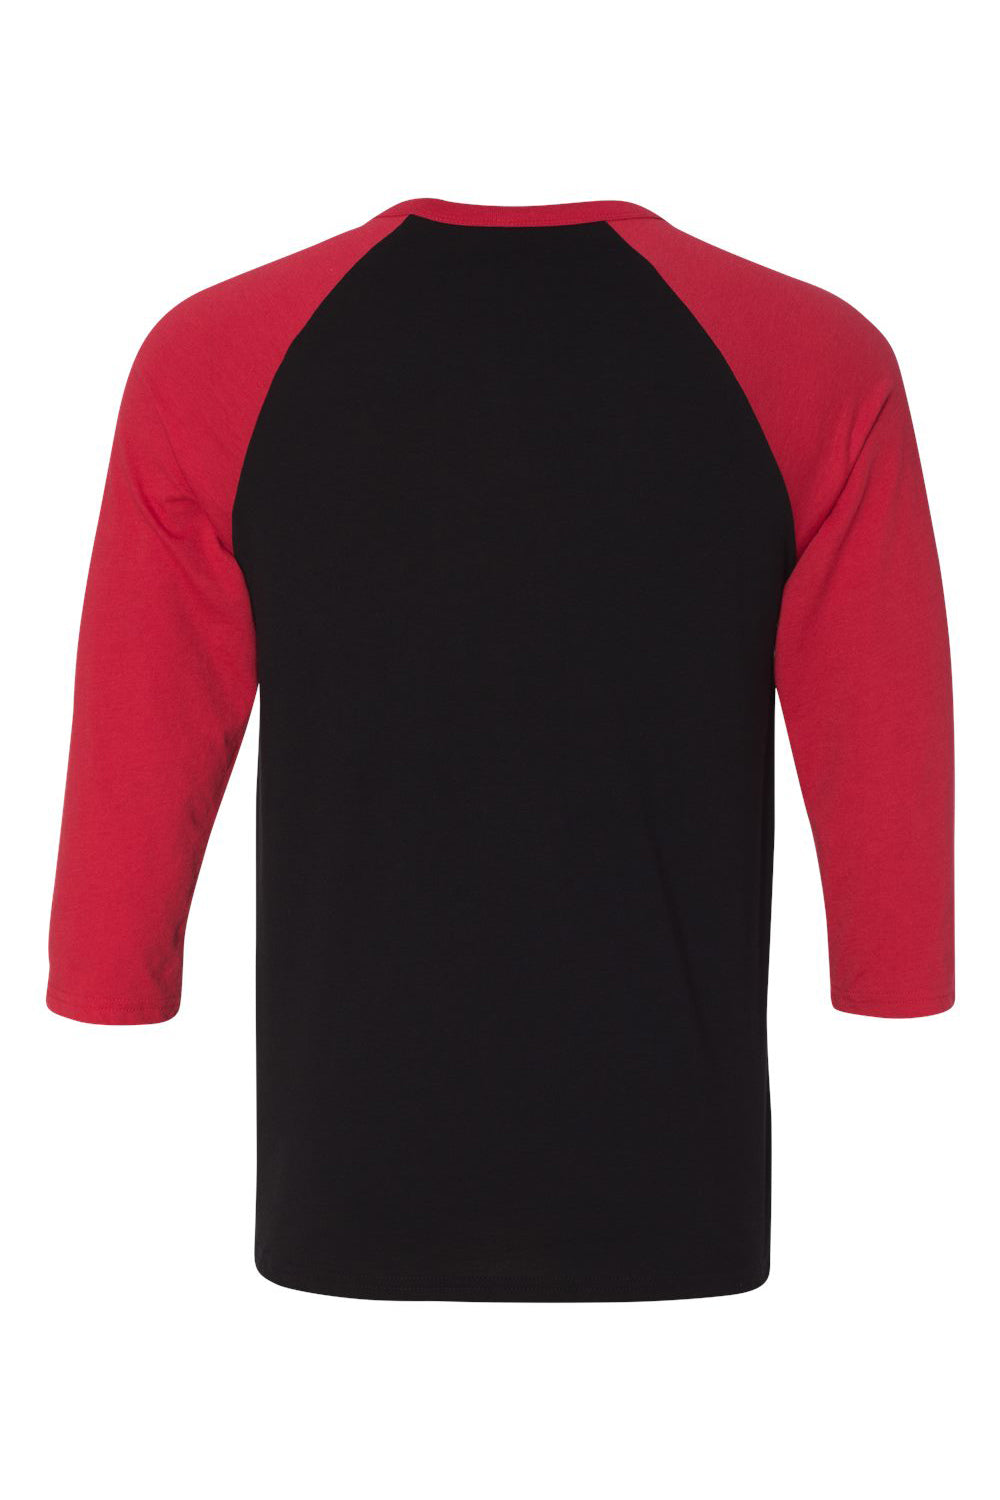 Bella + Canvas BC3200/3200 Mens 3/4 Sleeve Crewneck T-Shirt Black/Red Flat Back